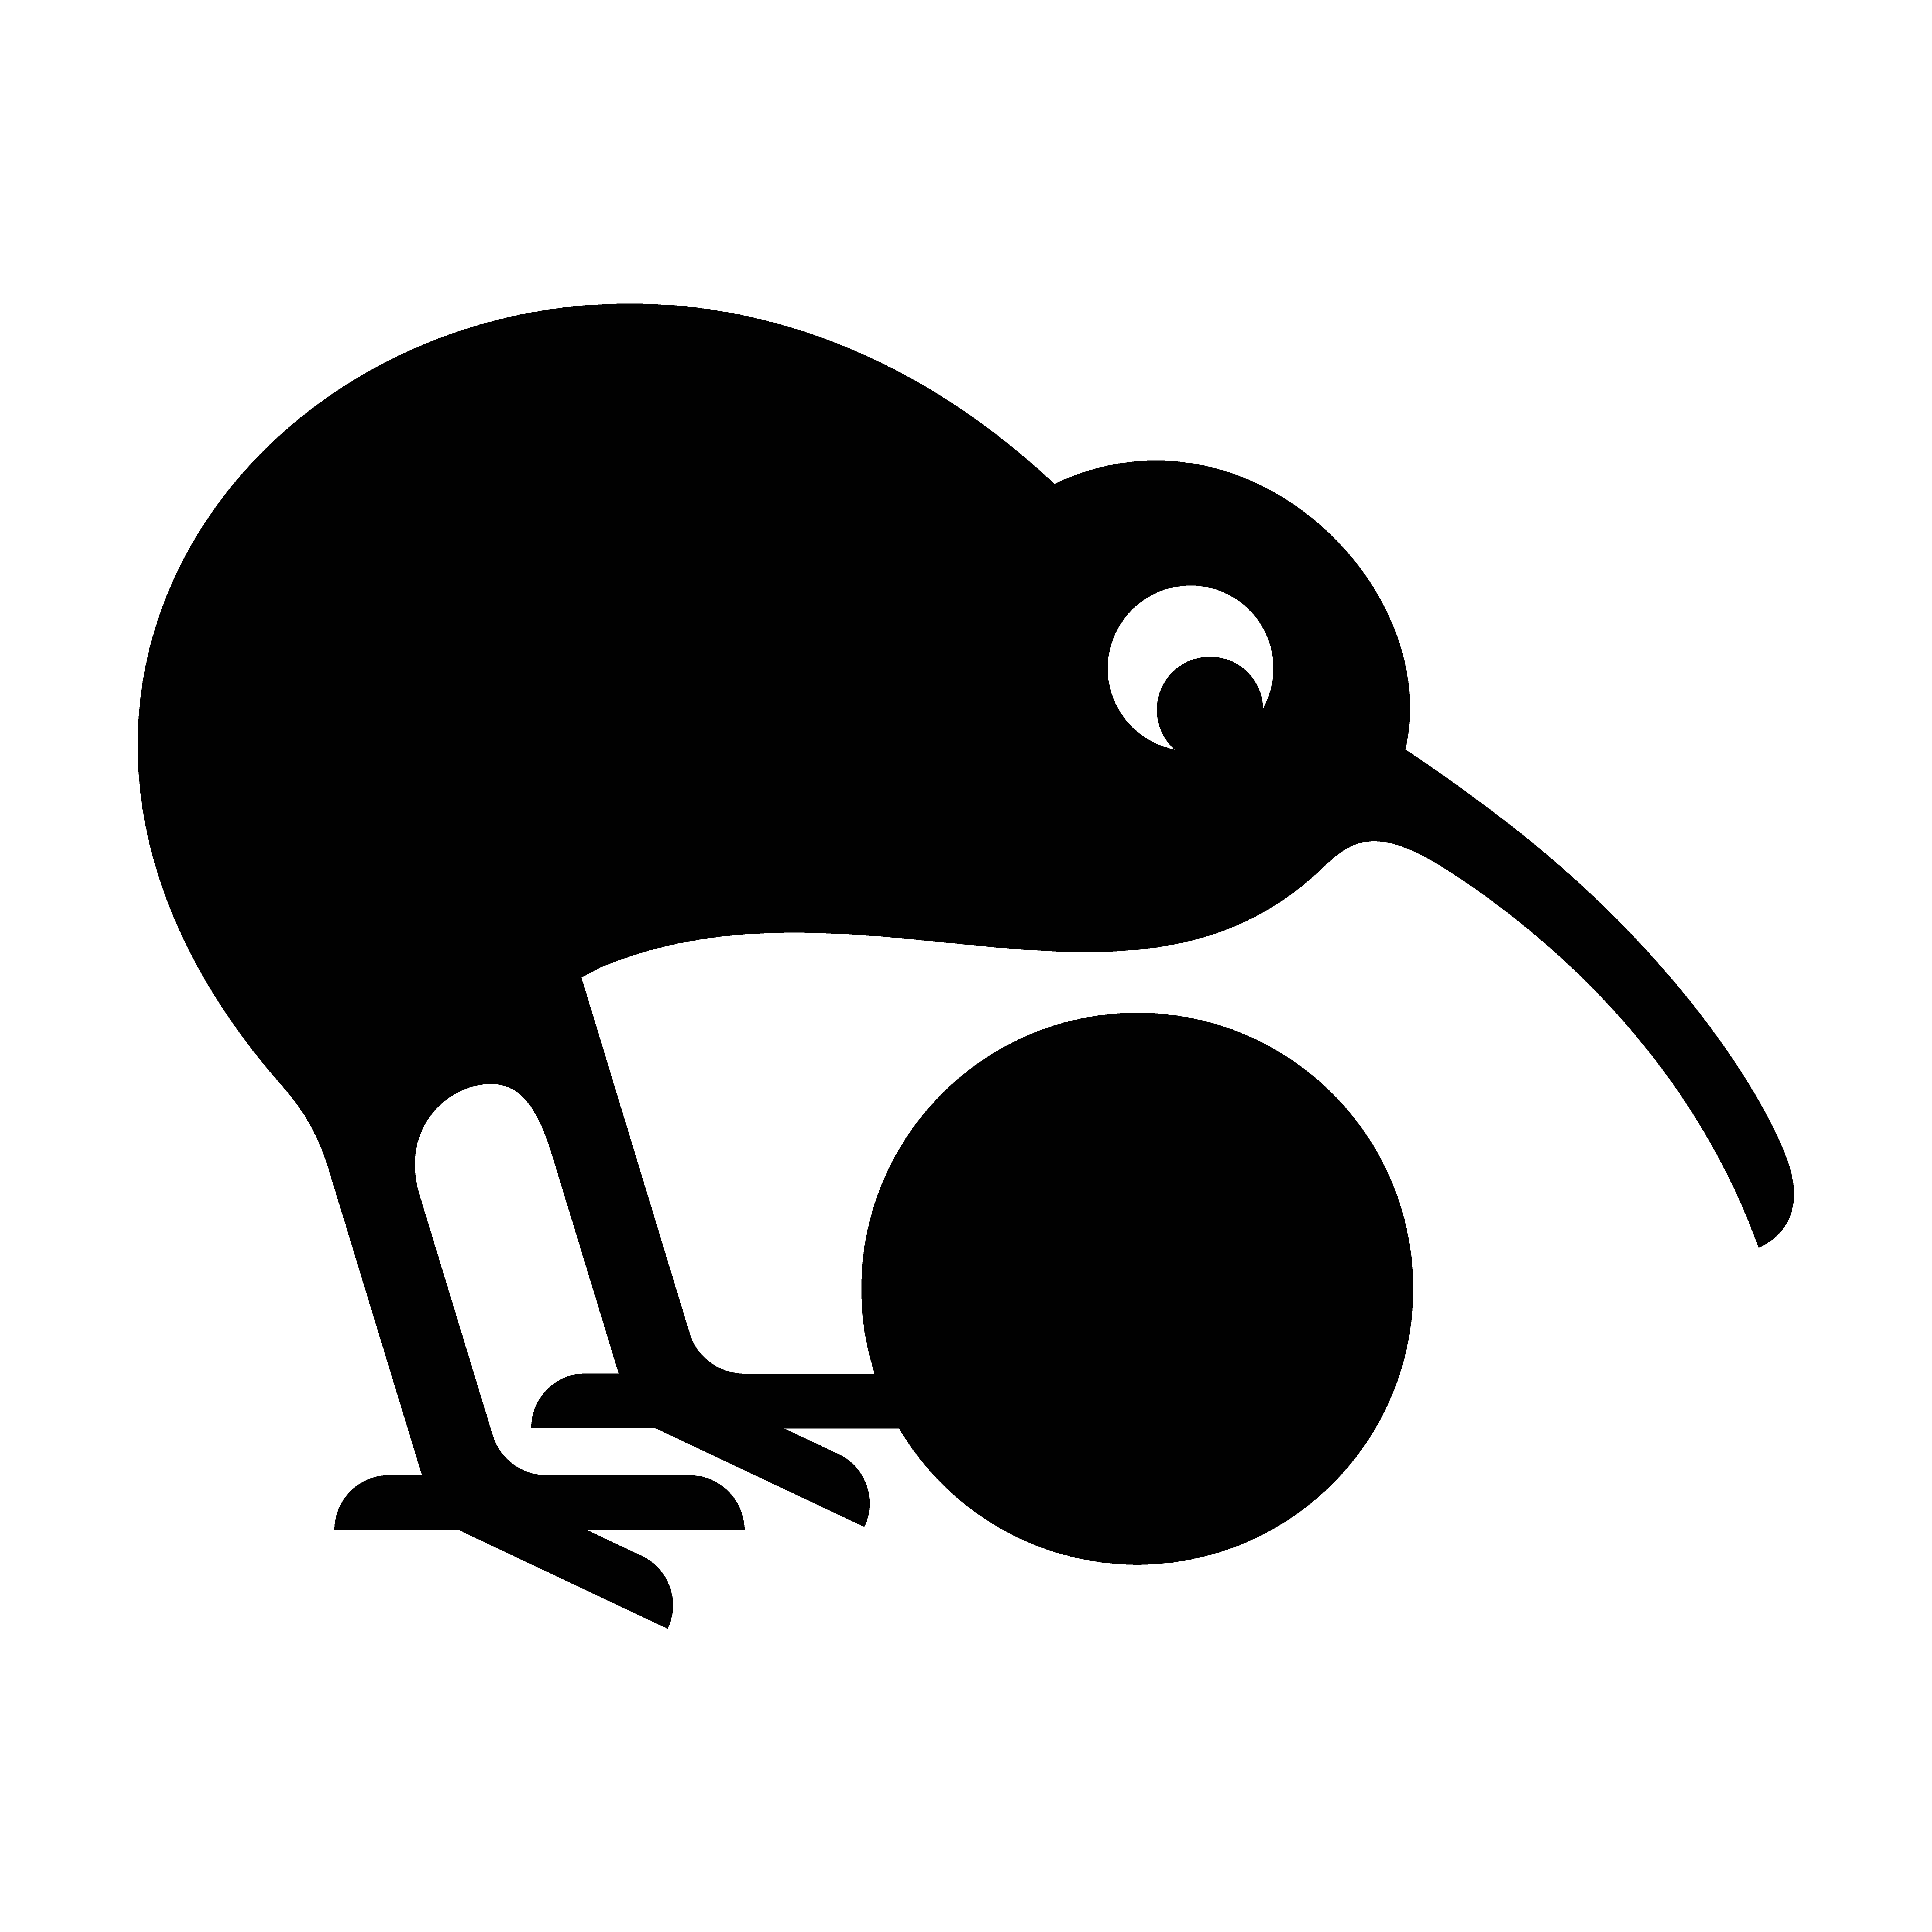 Kiwix logo